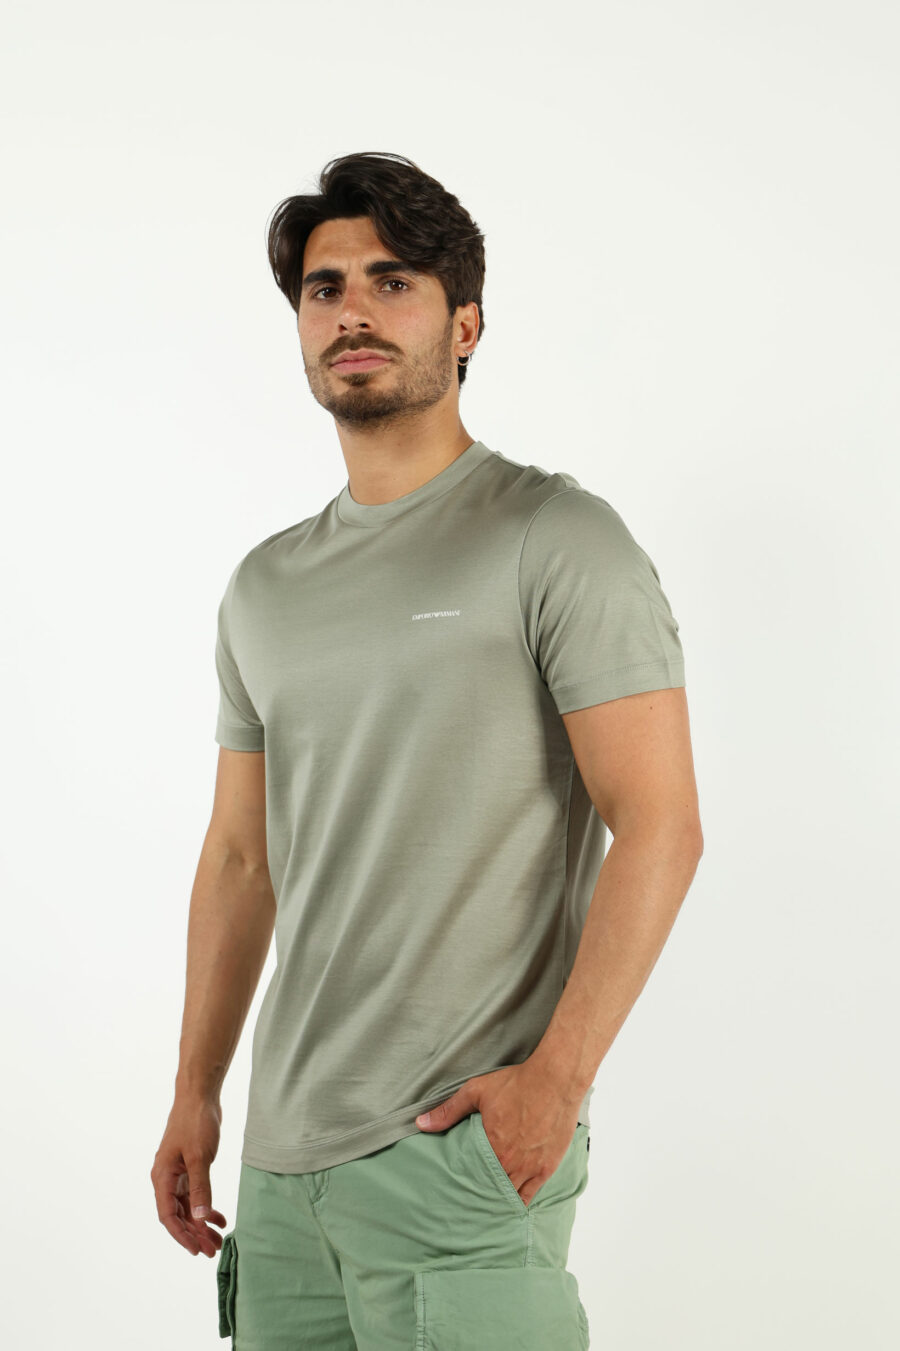 Camiseta verde oliva con minilogo blanco - number13533